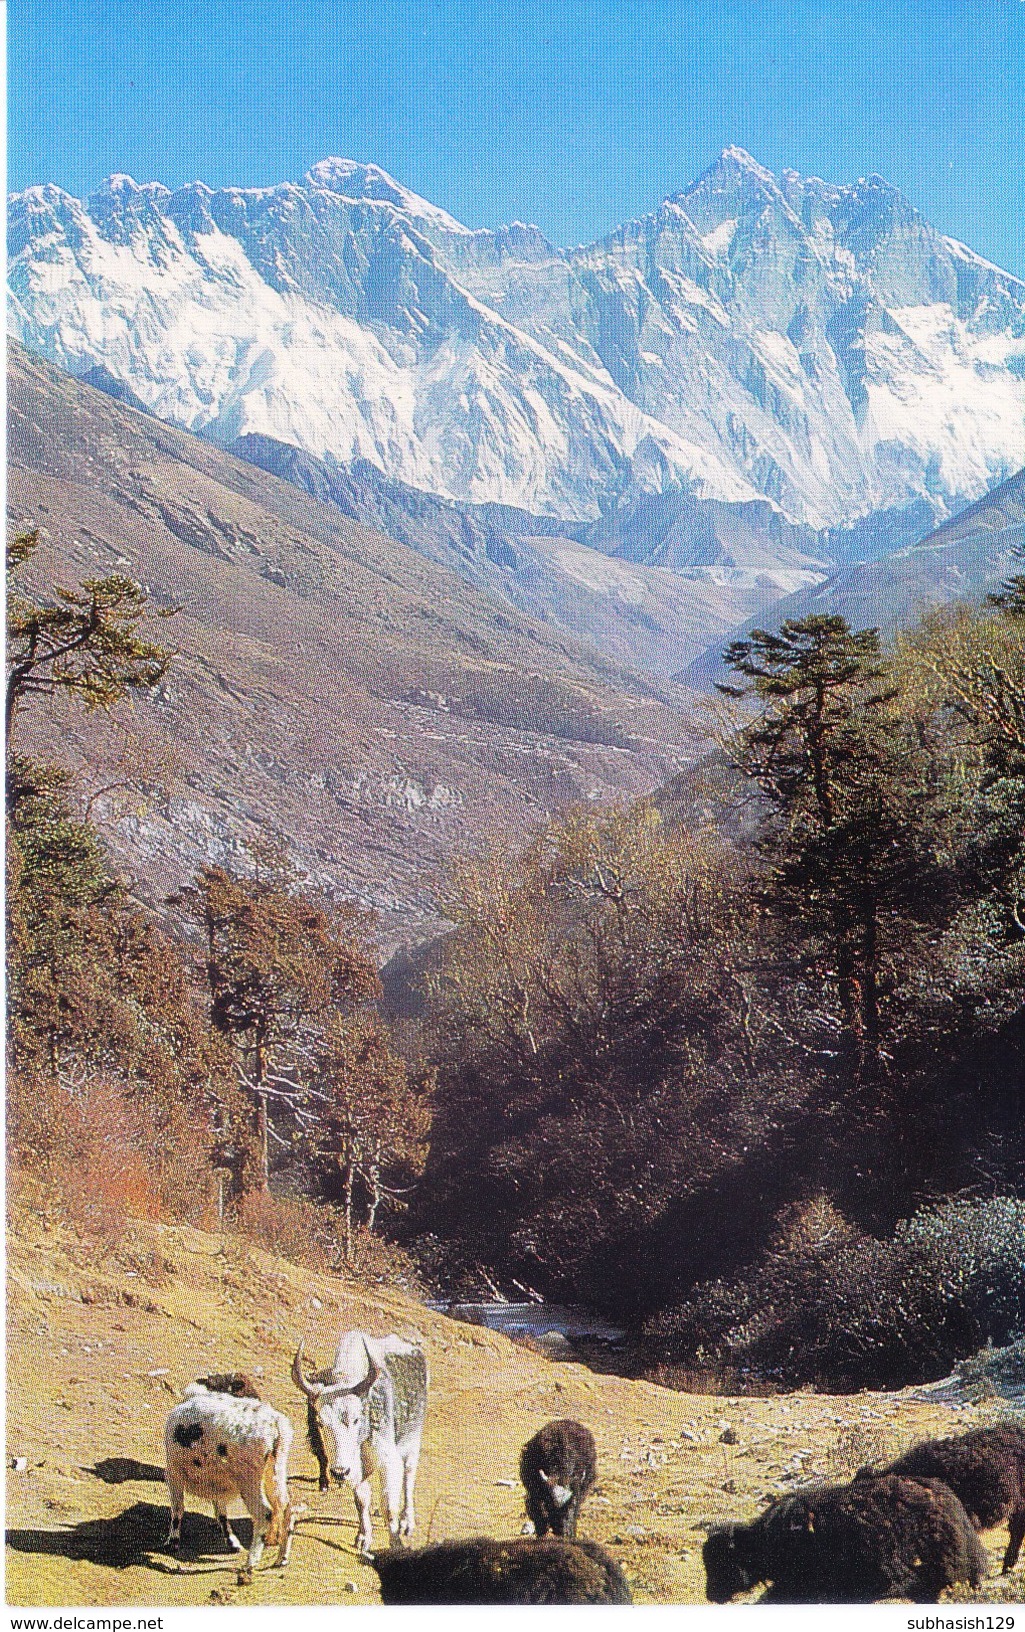 NEPAL - COLOUR PICTURE POST CARD - PEAKS OF HIMALAYA - NU TSE, MT. EVEREST, LHO TSE - TRAVEL / TOURISM / MOUNTAINEERING - Nepal